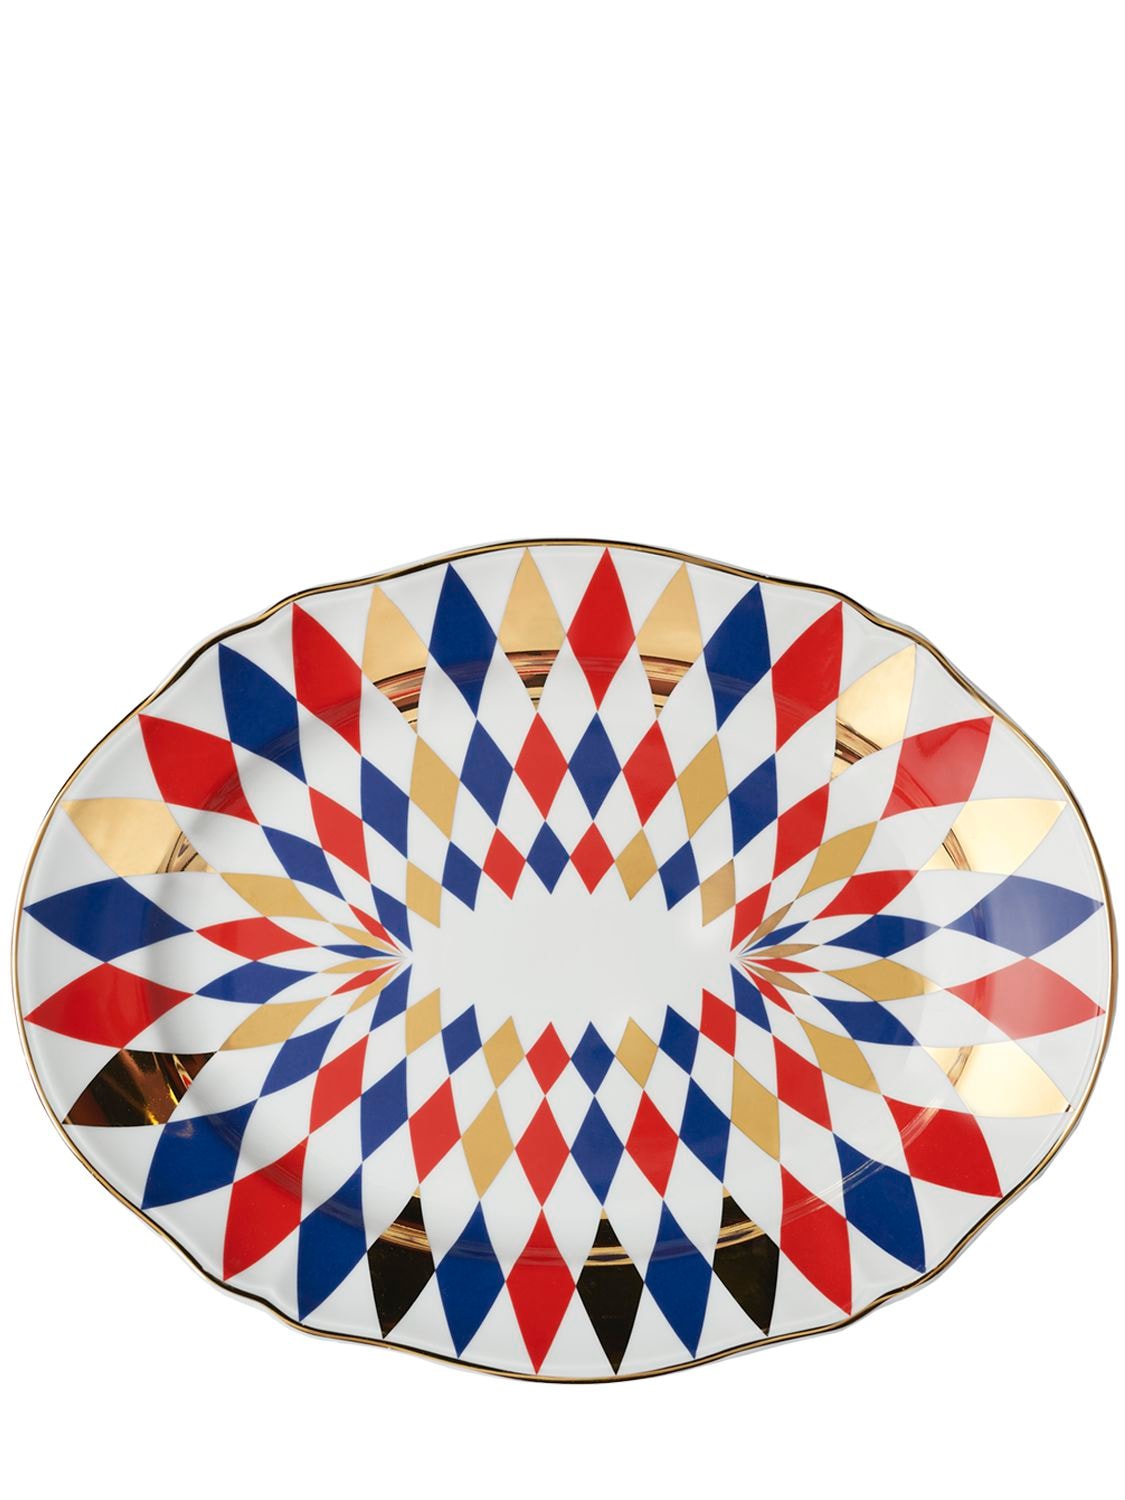 Image of Abracadabra Oval Platter